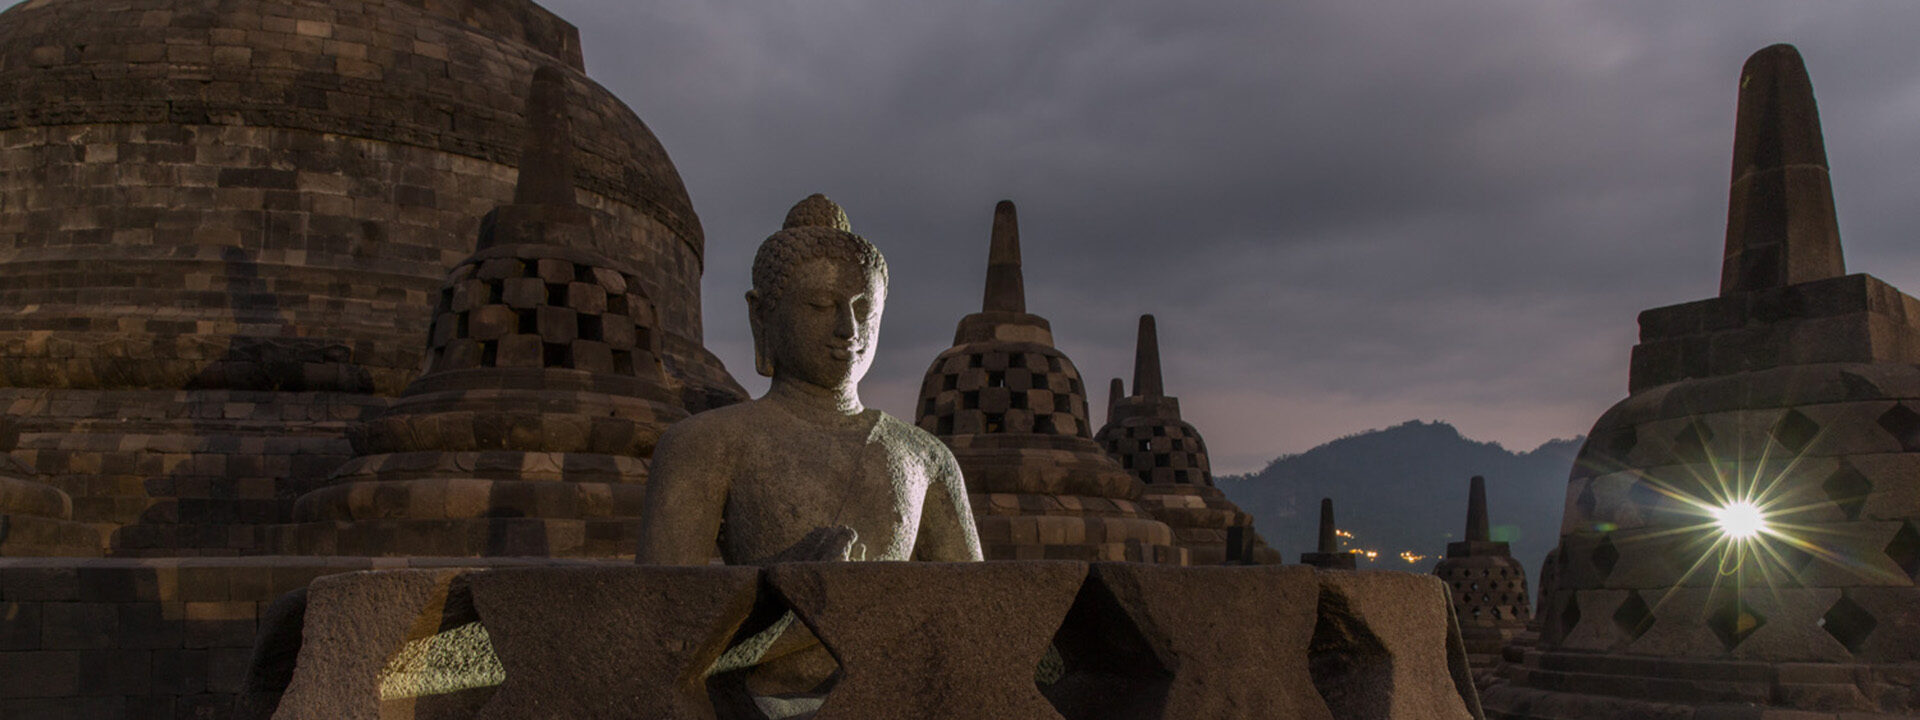 Sliderbild: ... des Borobudur